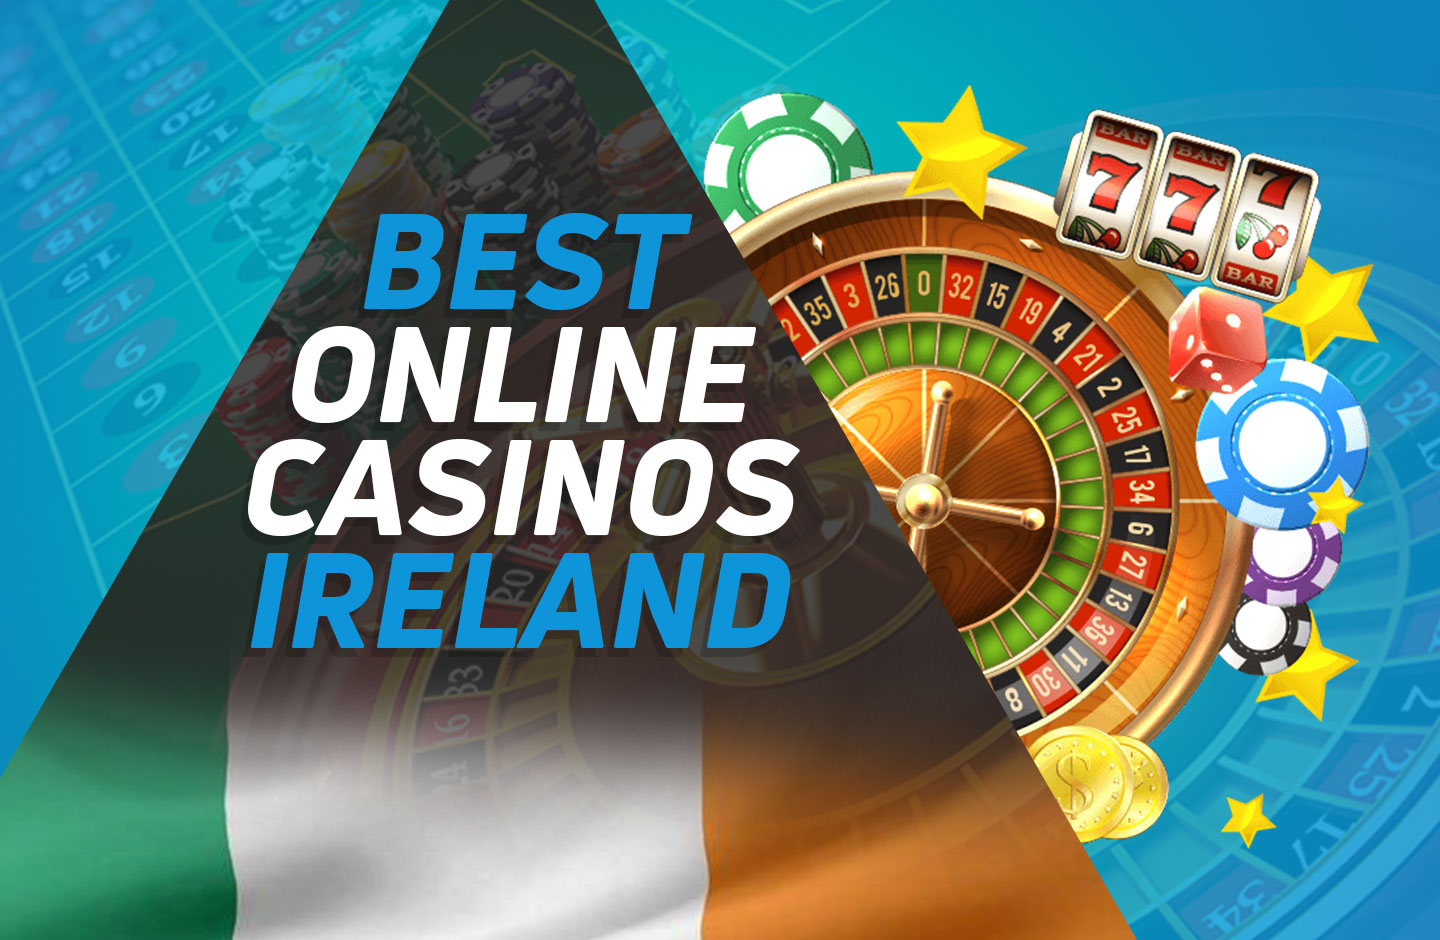 5 Stylish Ideas For Your best casino ireland